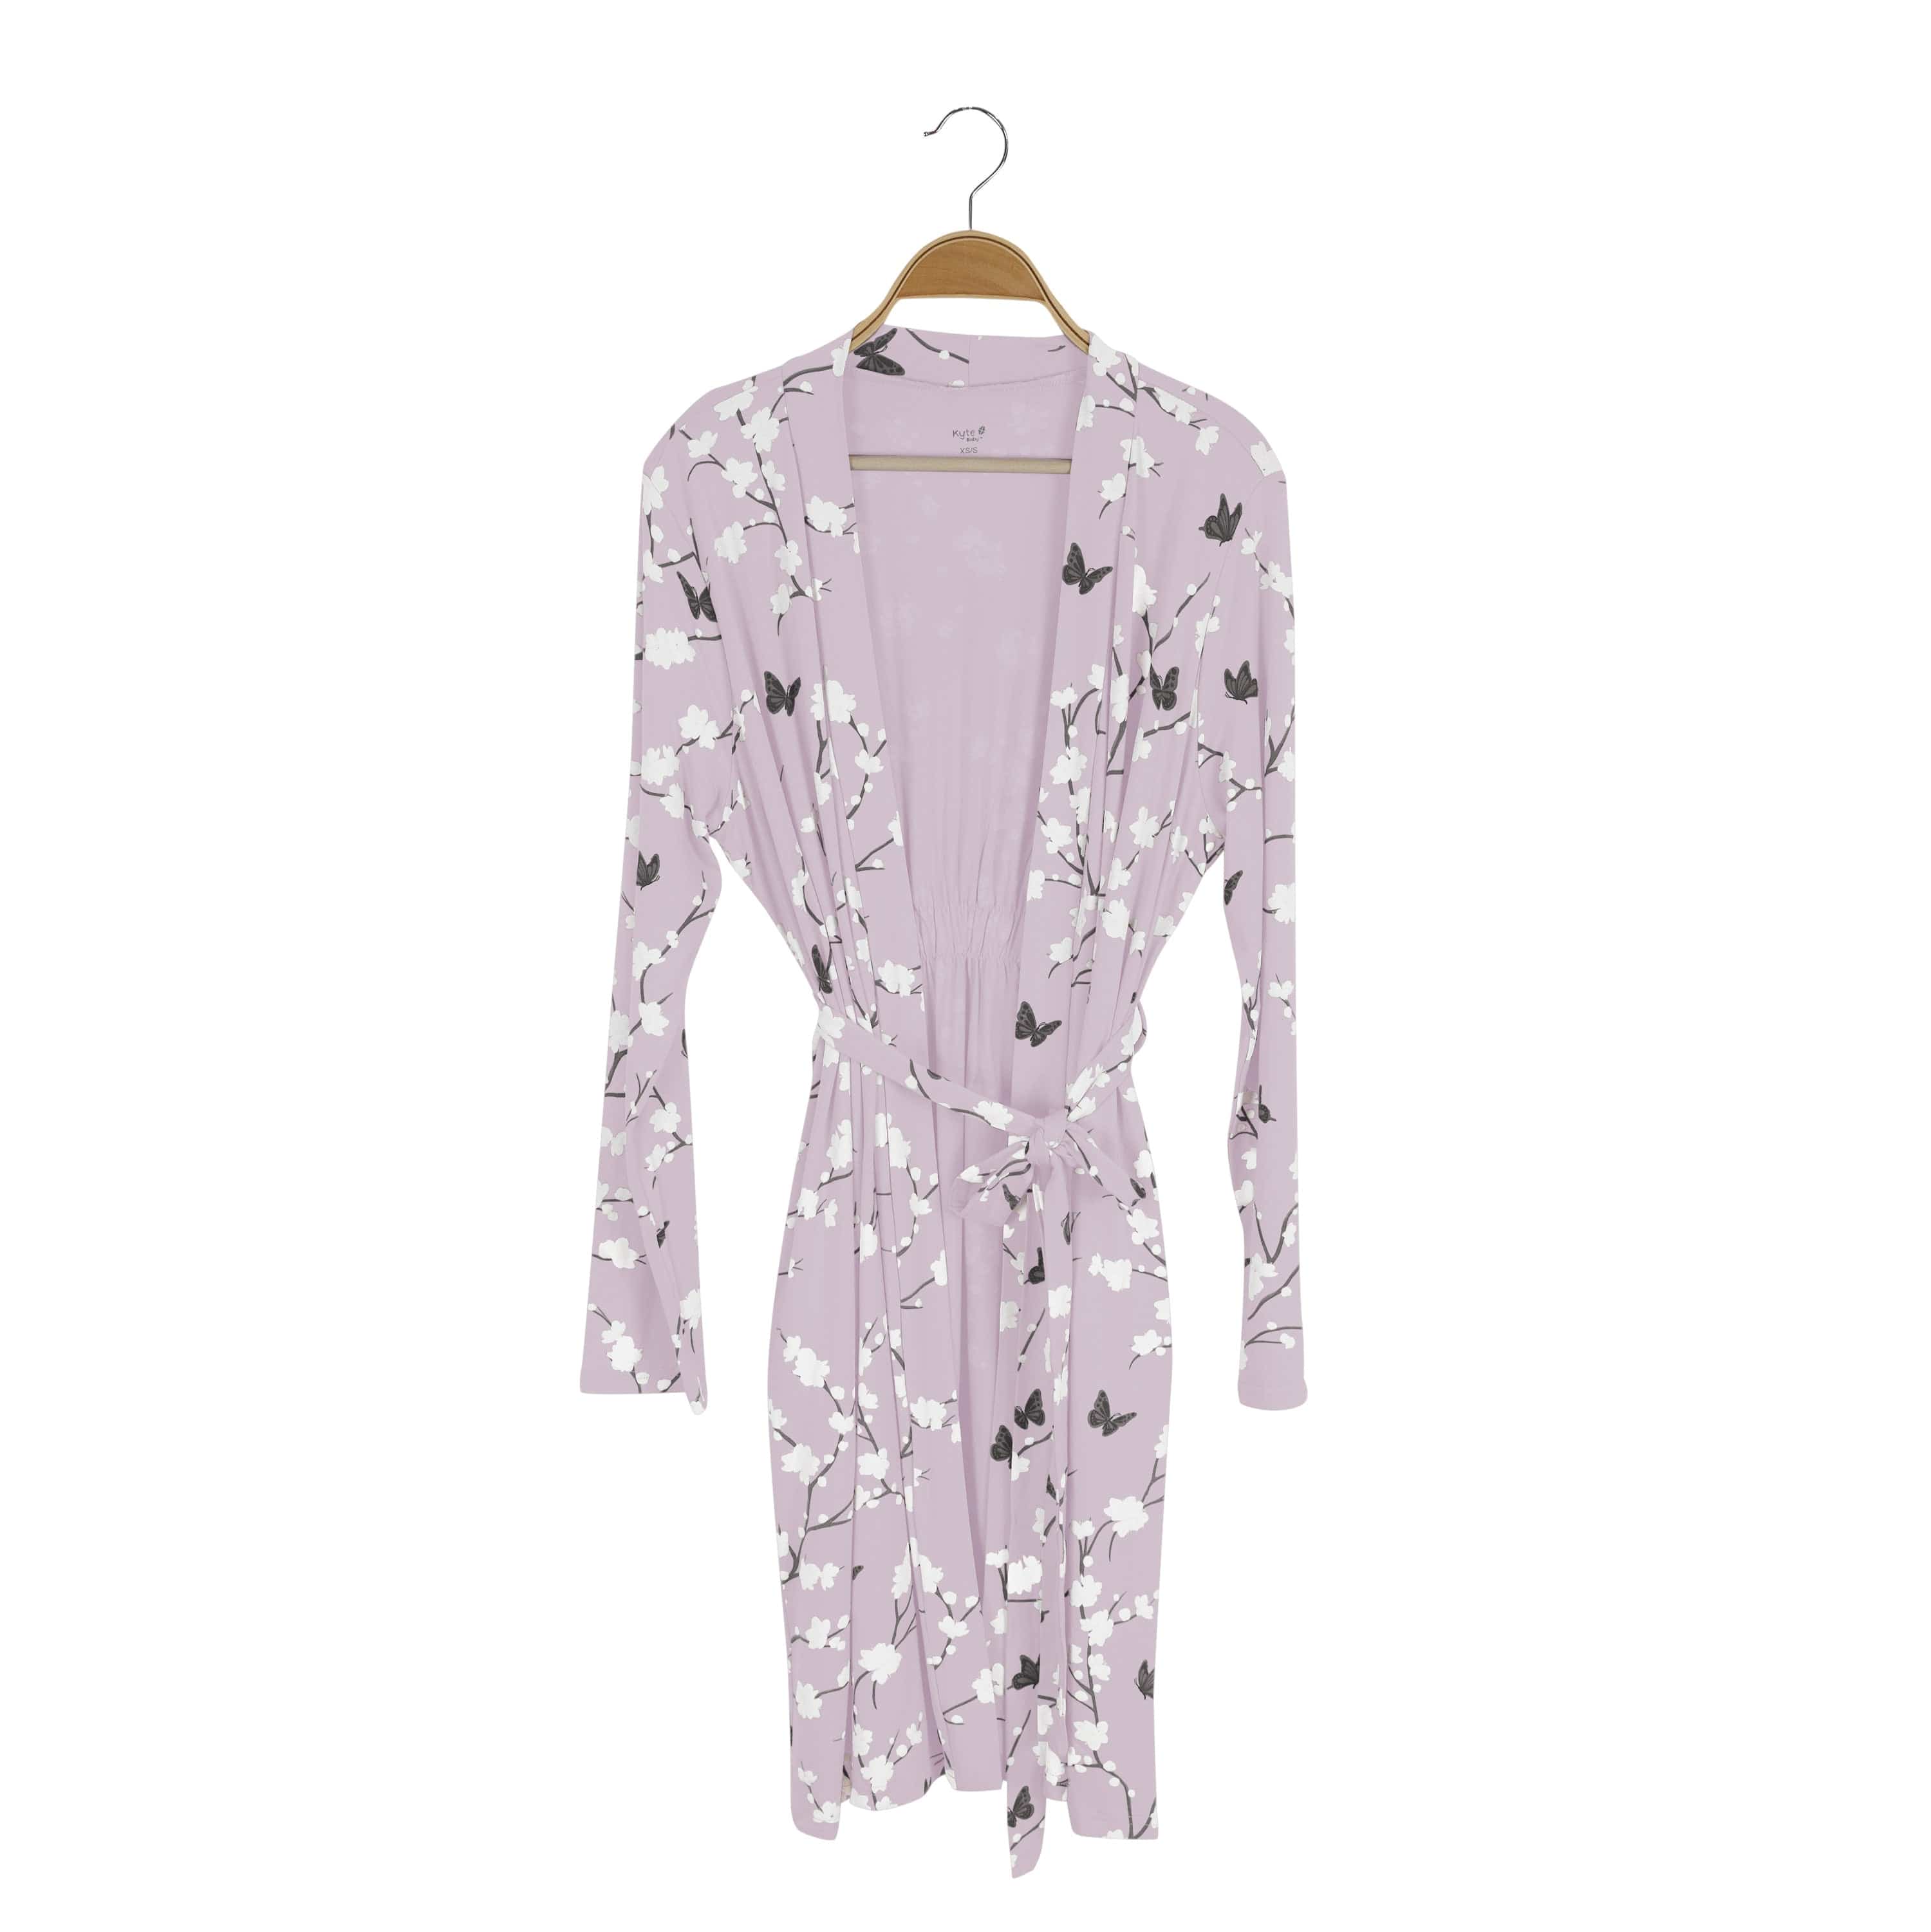 Kyte Baby Women's Lounge Robe Women’s Lounge Robe in Cherry Blossom